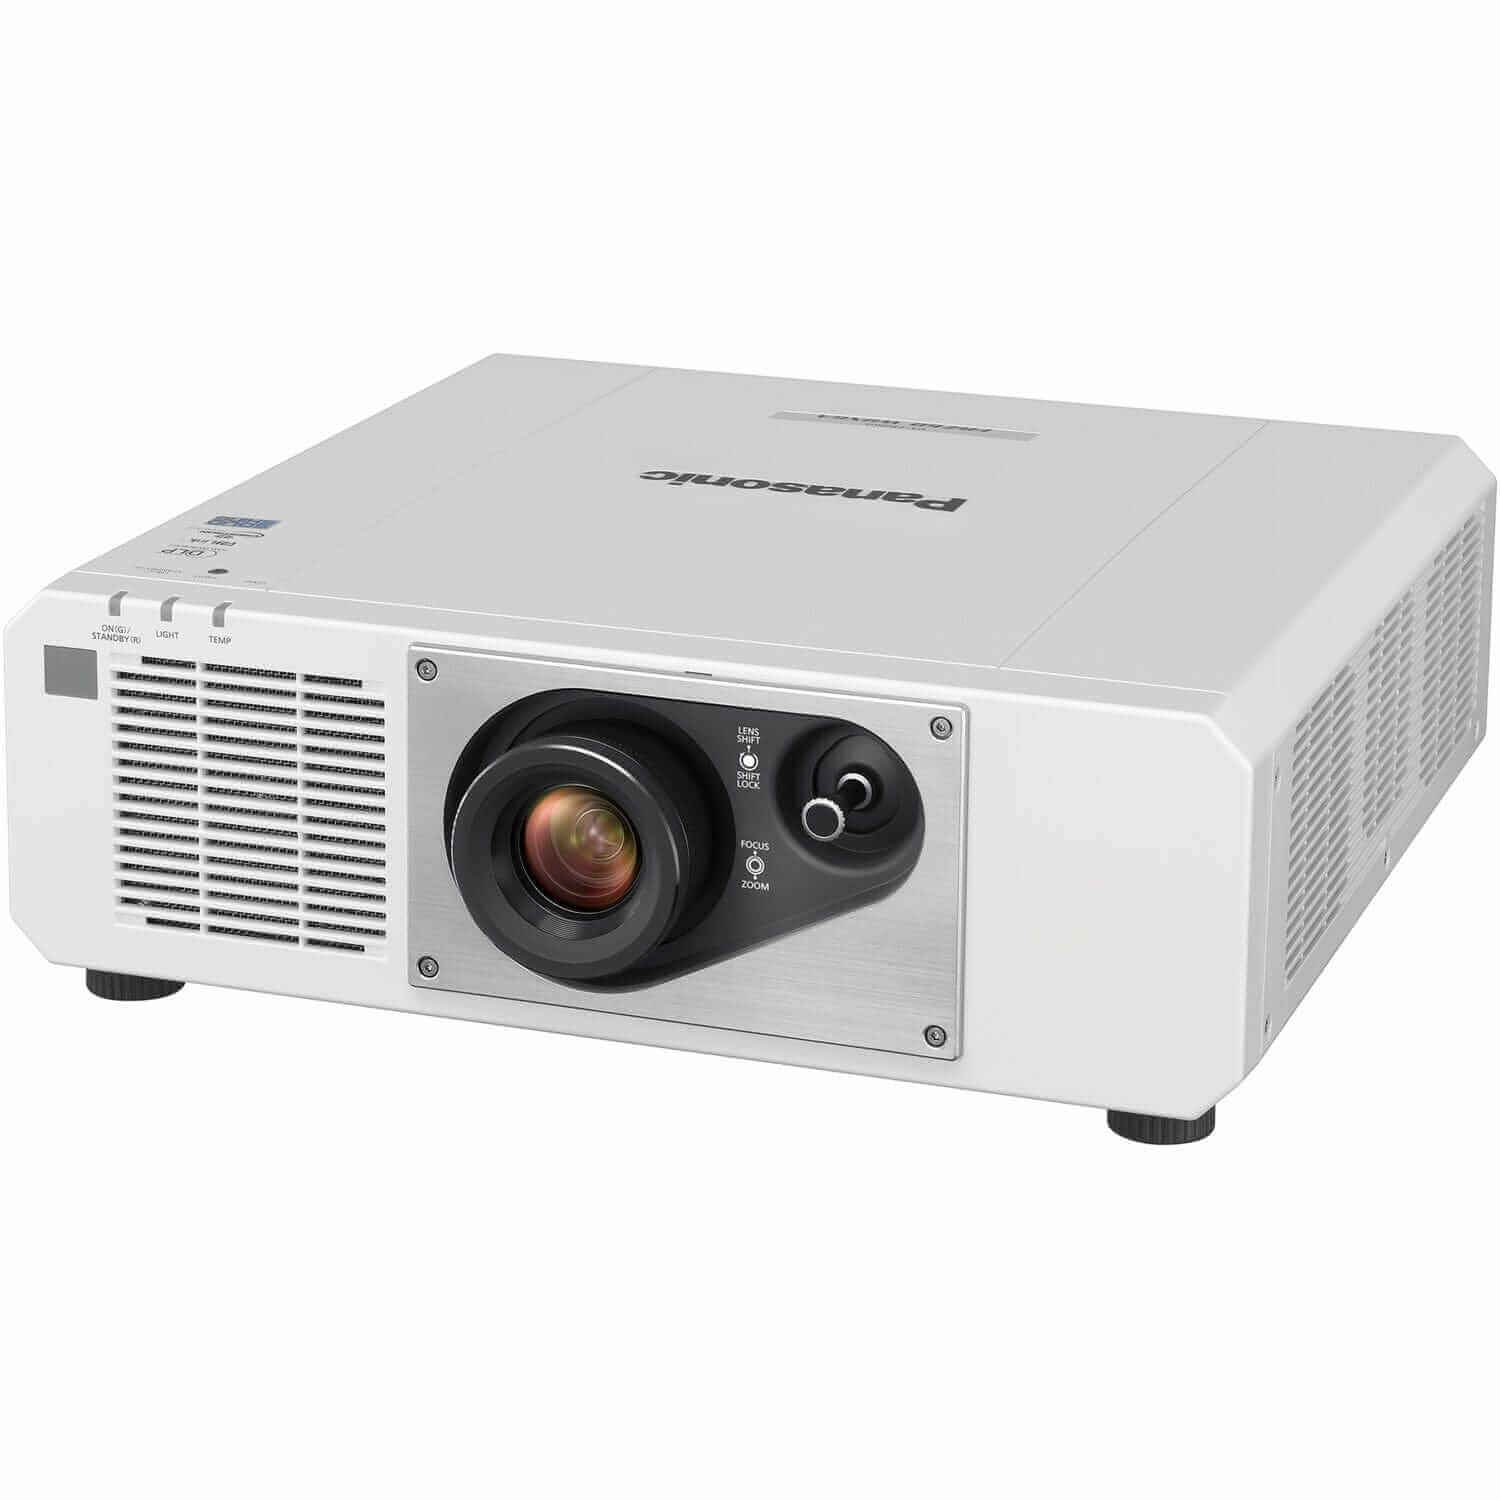 Panasonic PT-FRZ60WU7 WUXGA 1920x1200 6000 Lumen DLP 4K Laser Projector